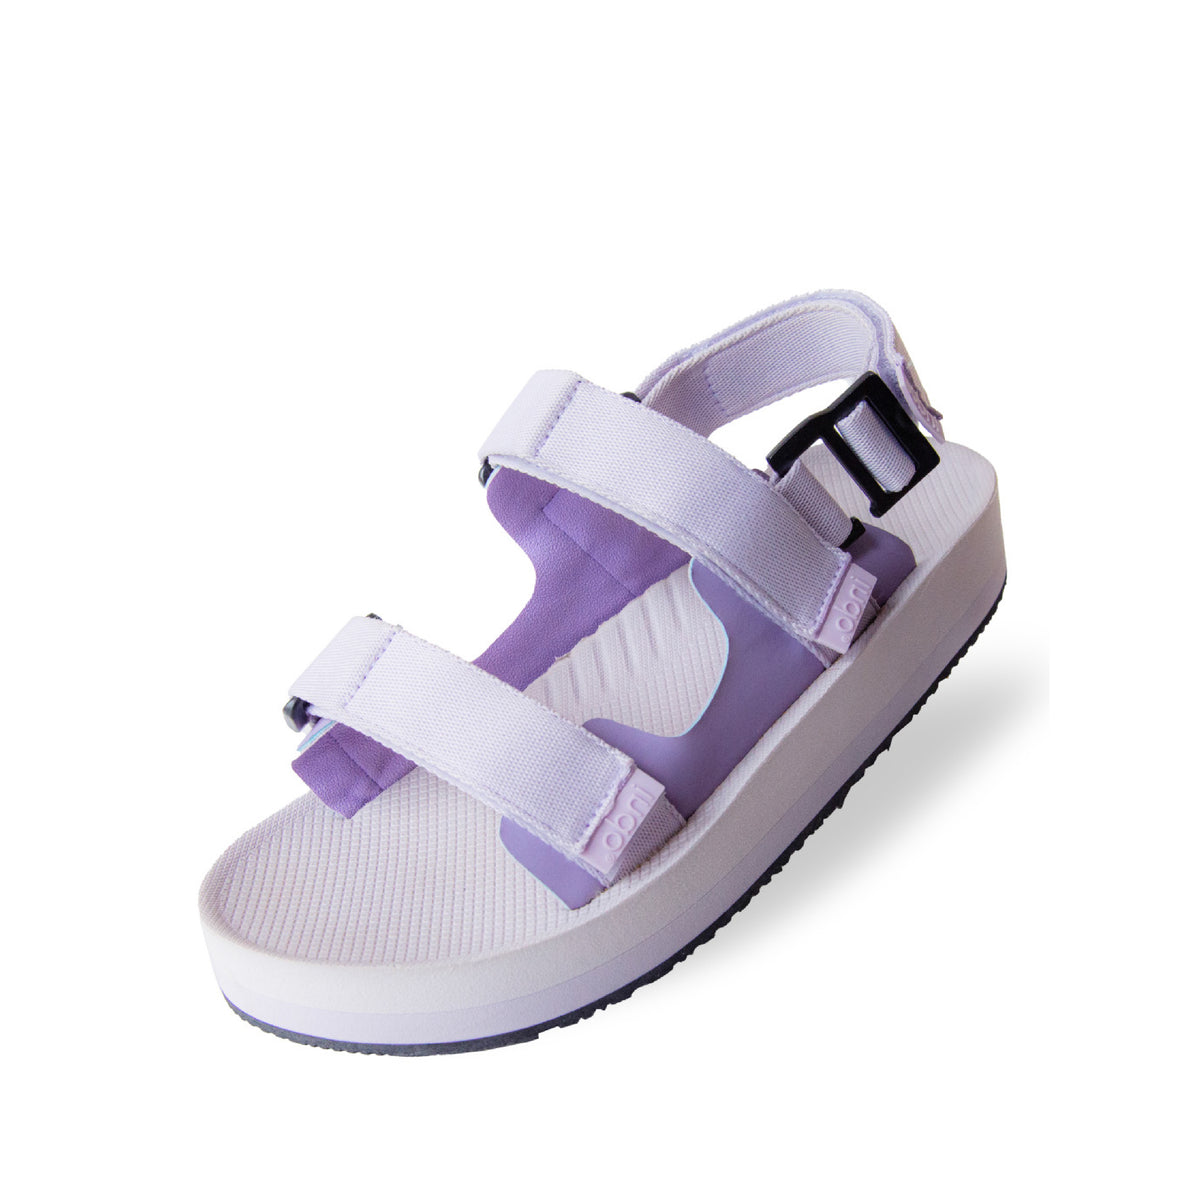 Women’s Sandals Adventurer - Purple/Haze